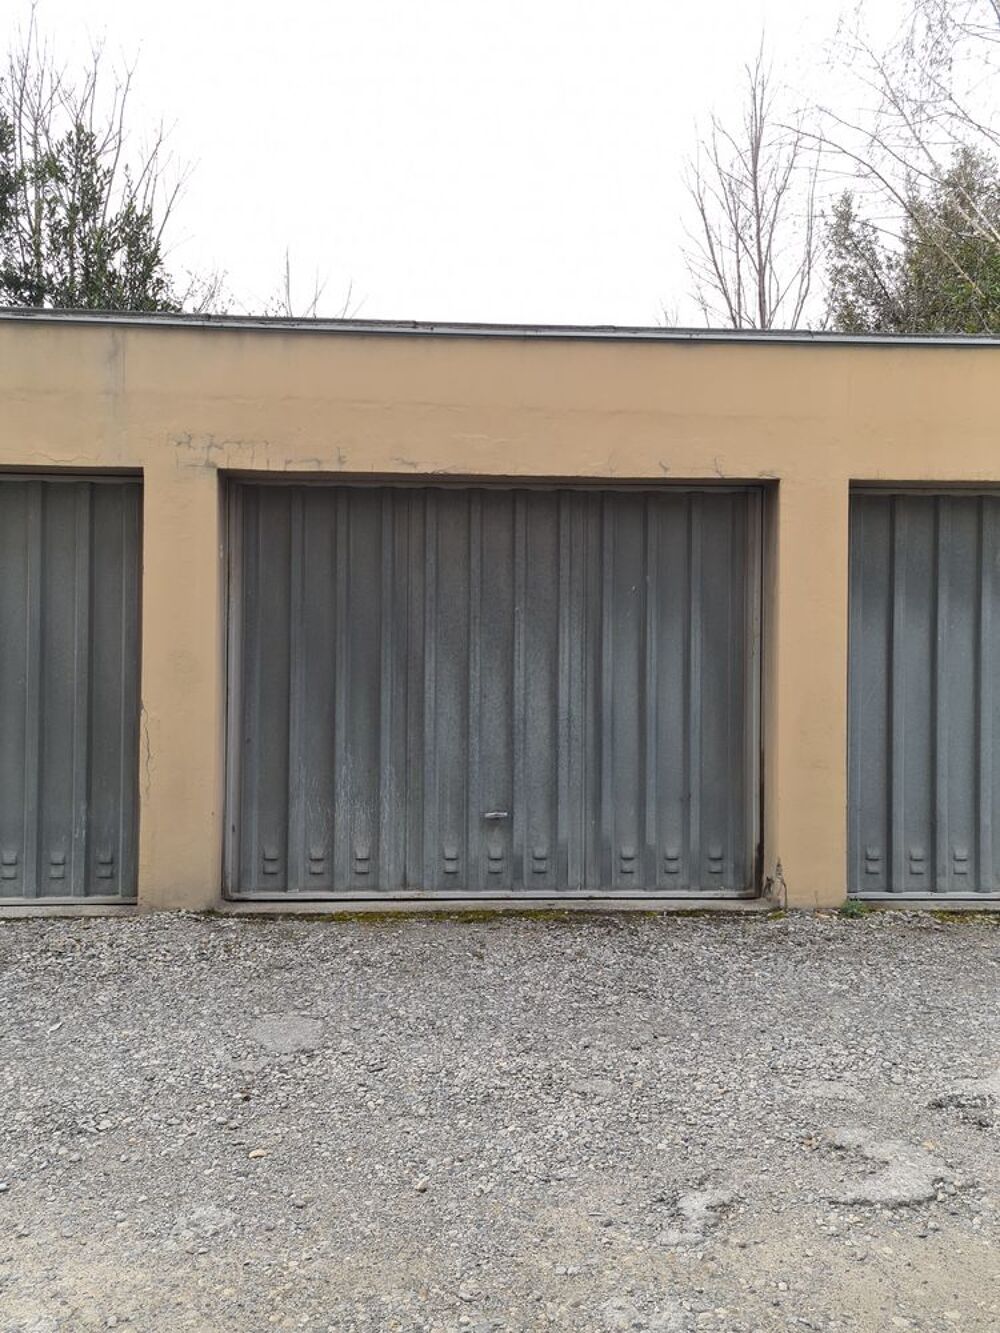 Location Parking/Garage Garage  Grenoble Grand Chtelet. Grenoble